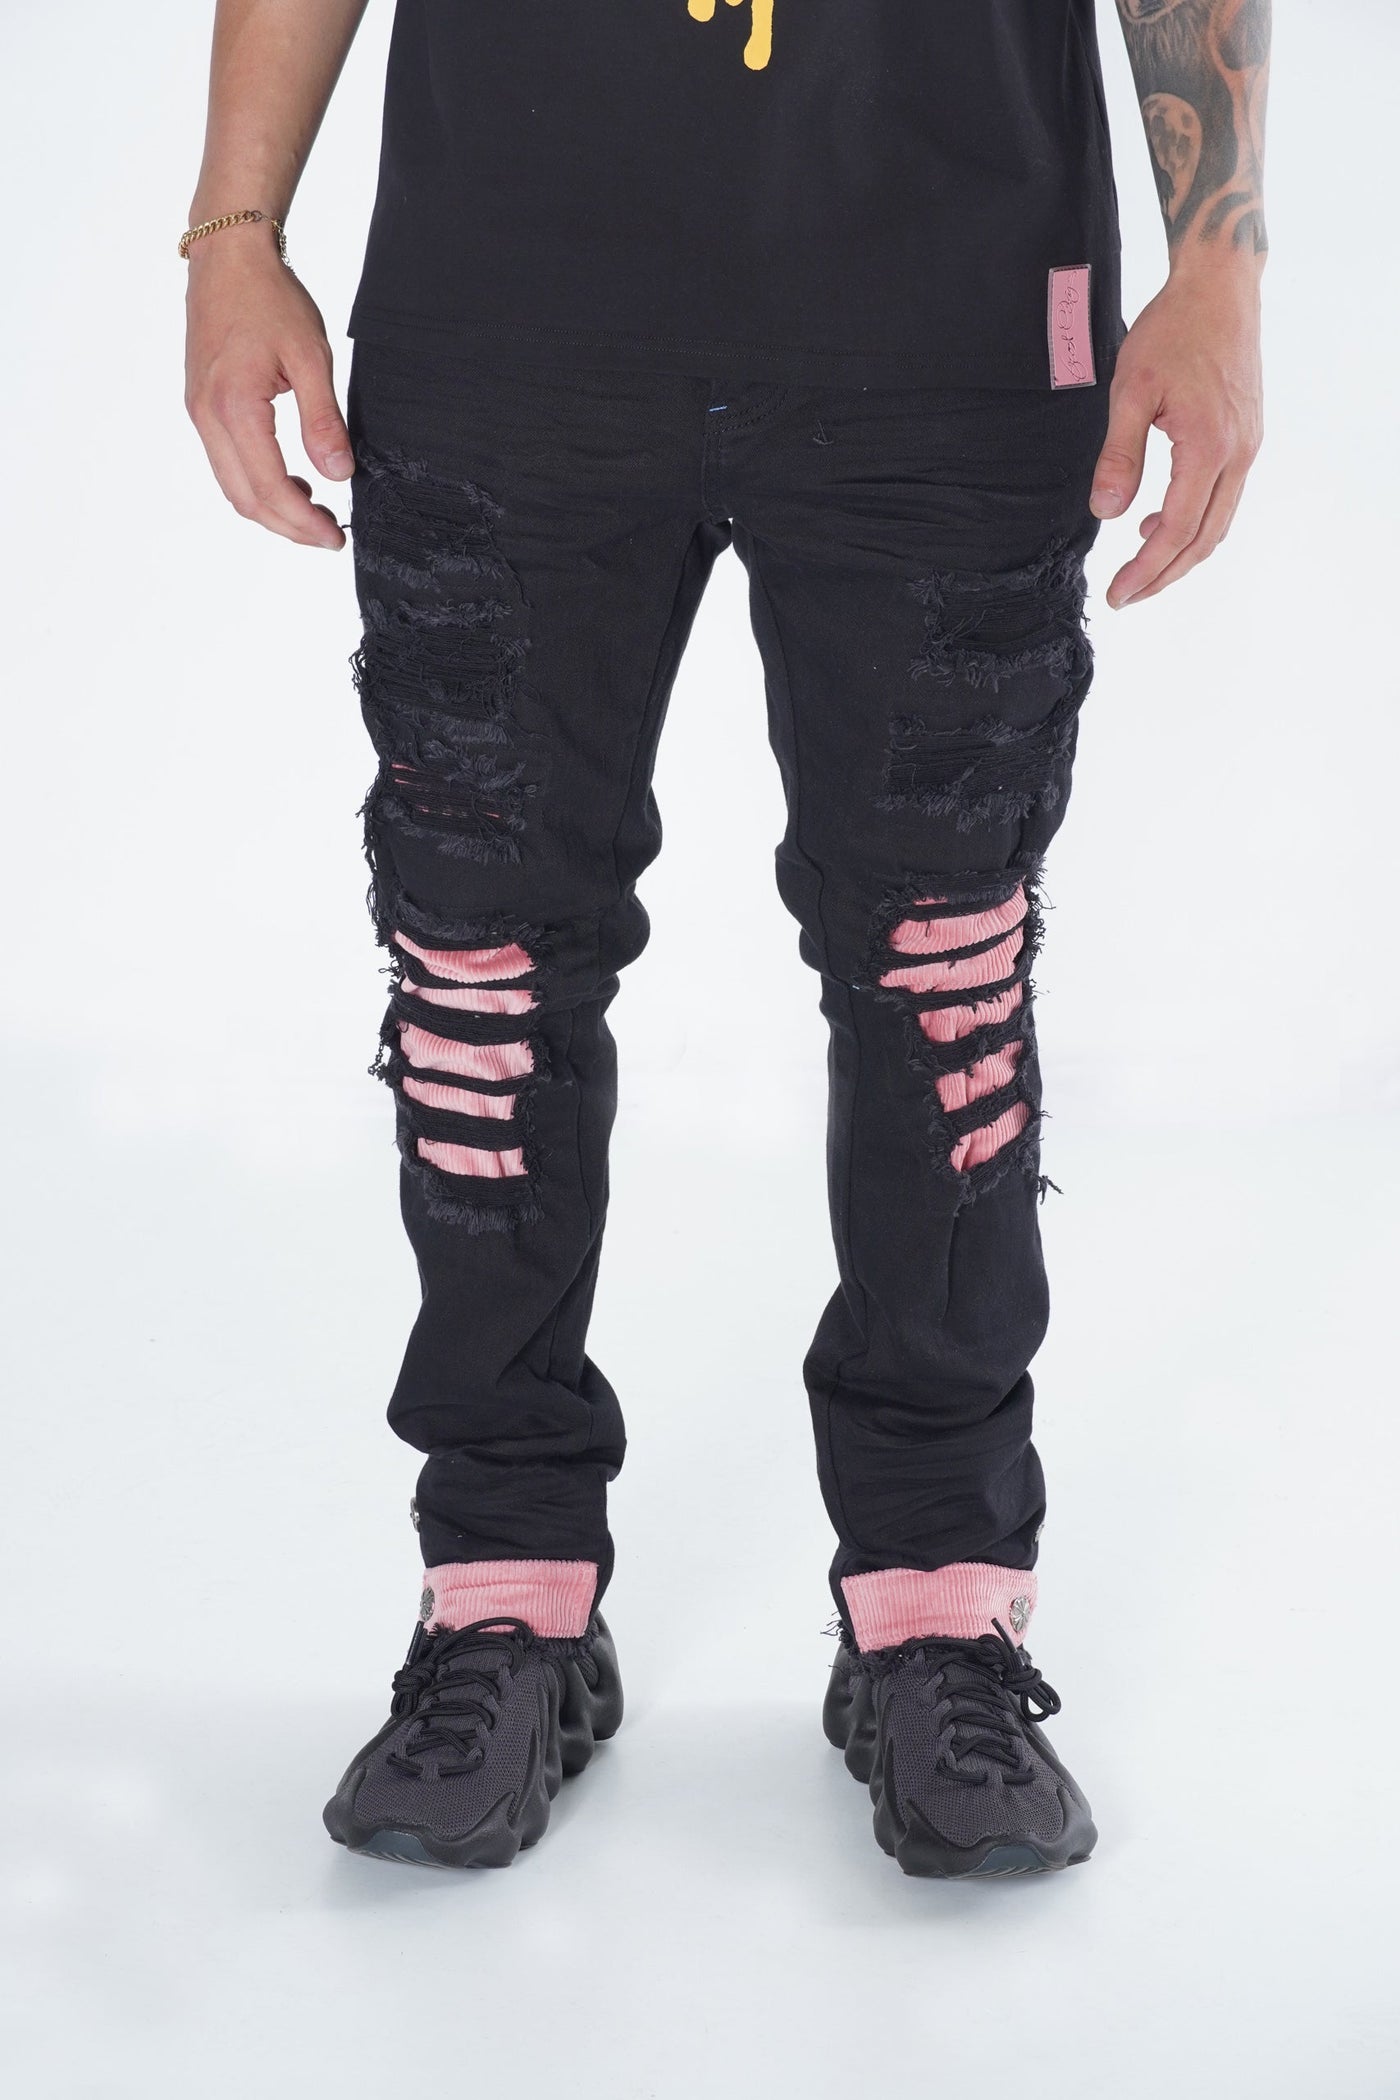 F1745 Shredded jeans w/ Cord Layer - Black